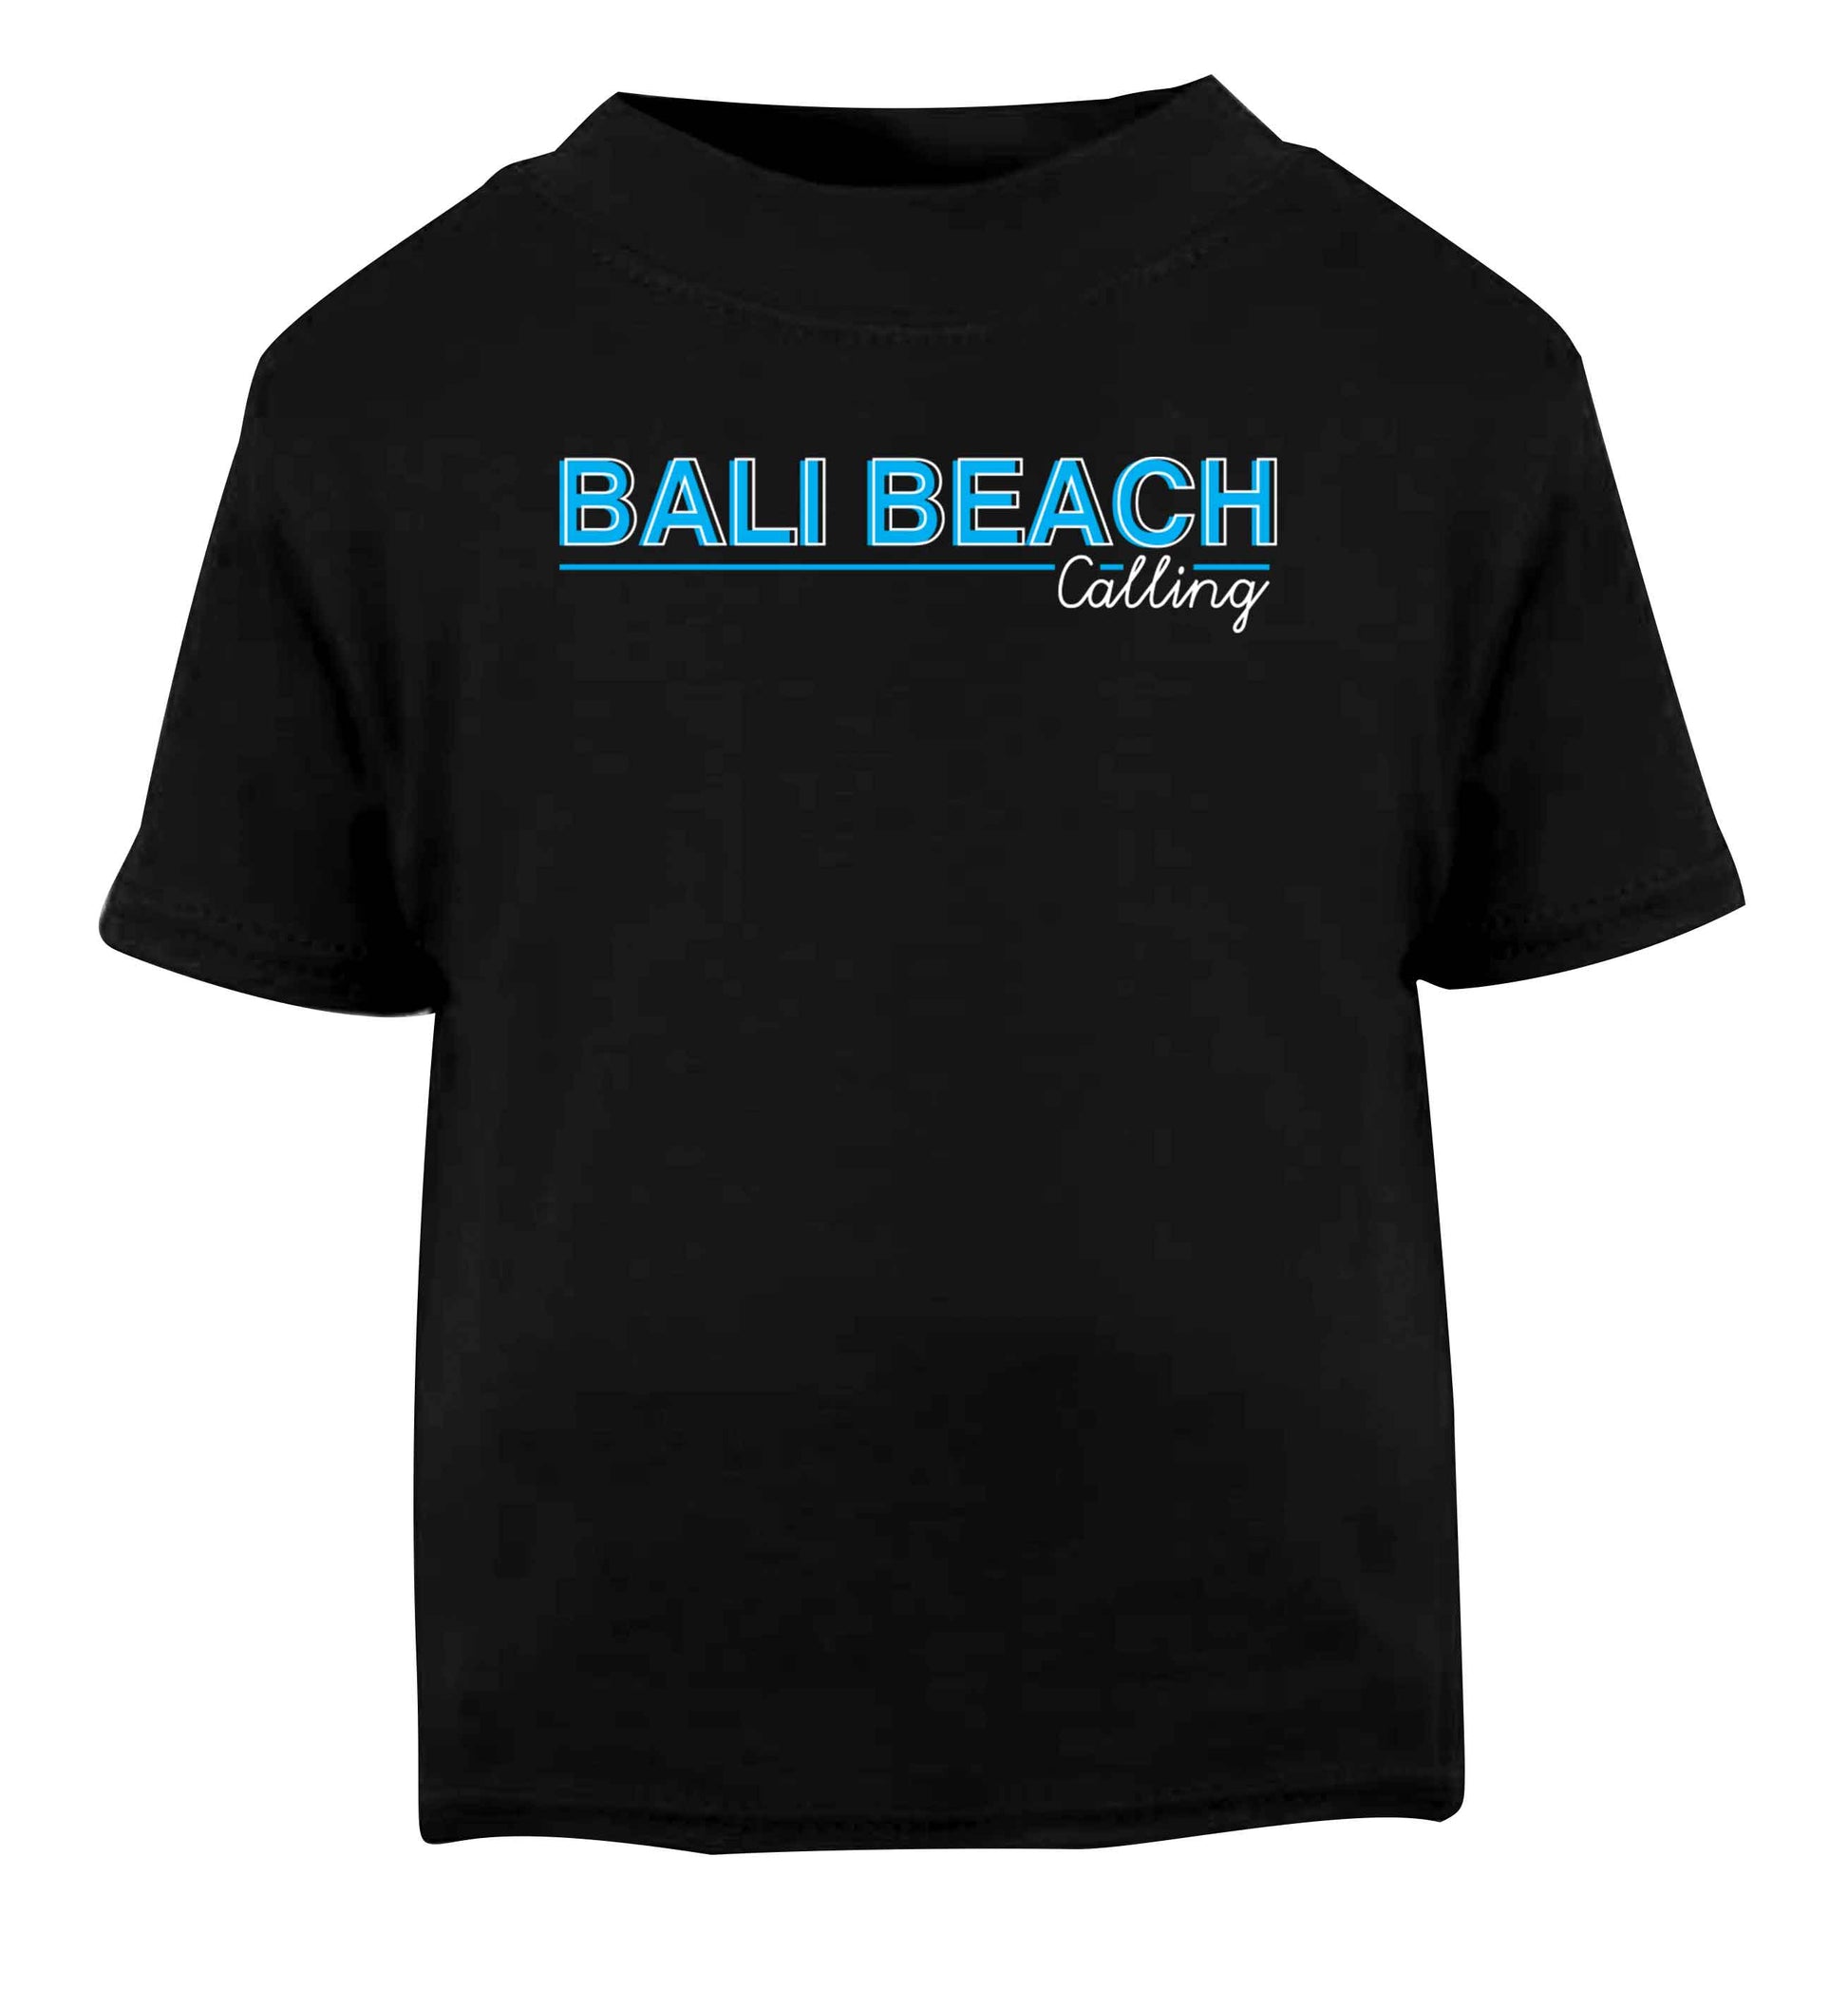 Bali beach calling Black Baby Toddler Tshirt 2 years